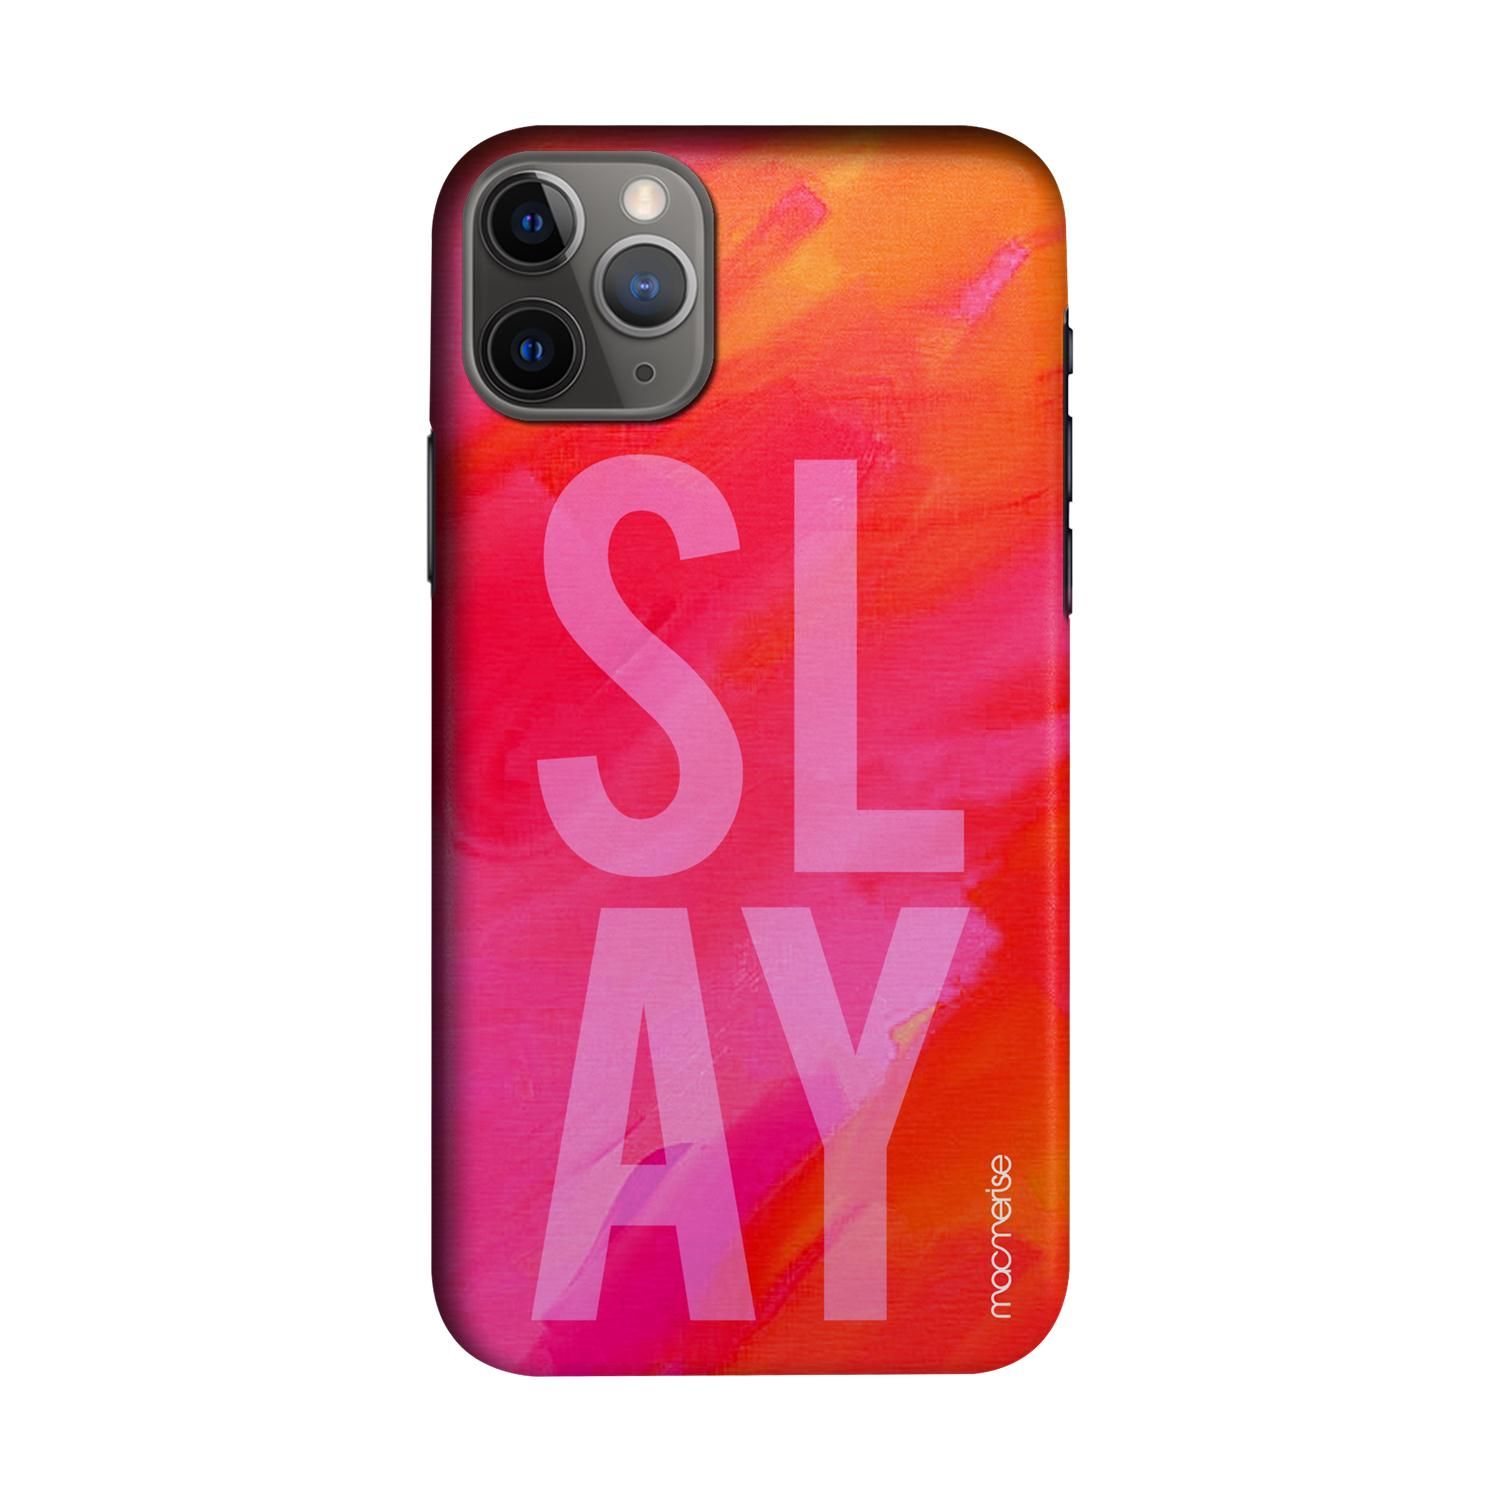 Buy Slay Pink - Sleek Phone Case for iPhone 11 Pro Online